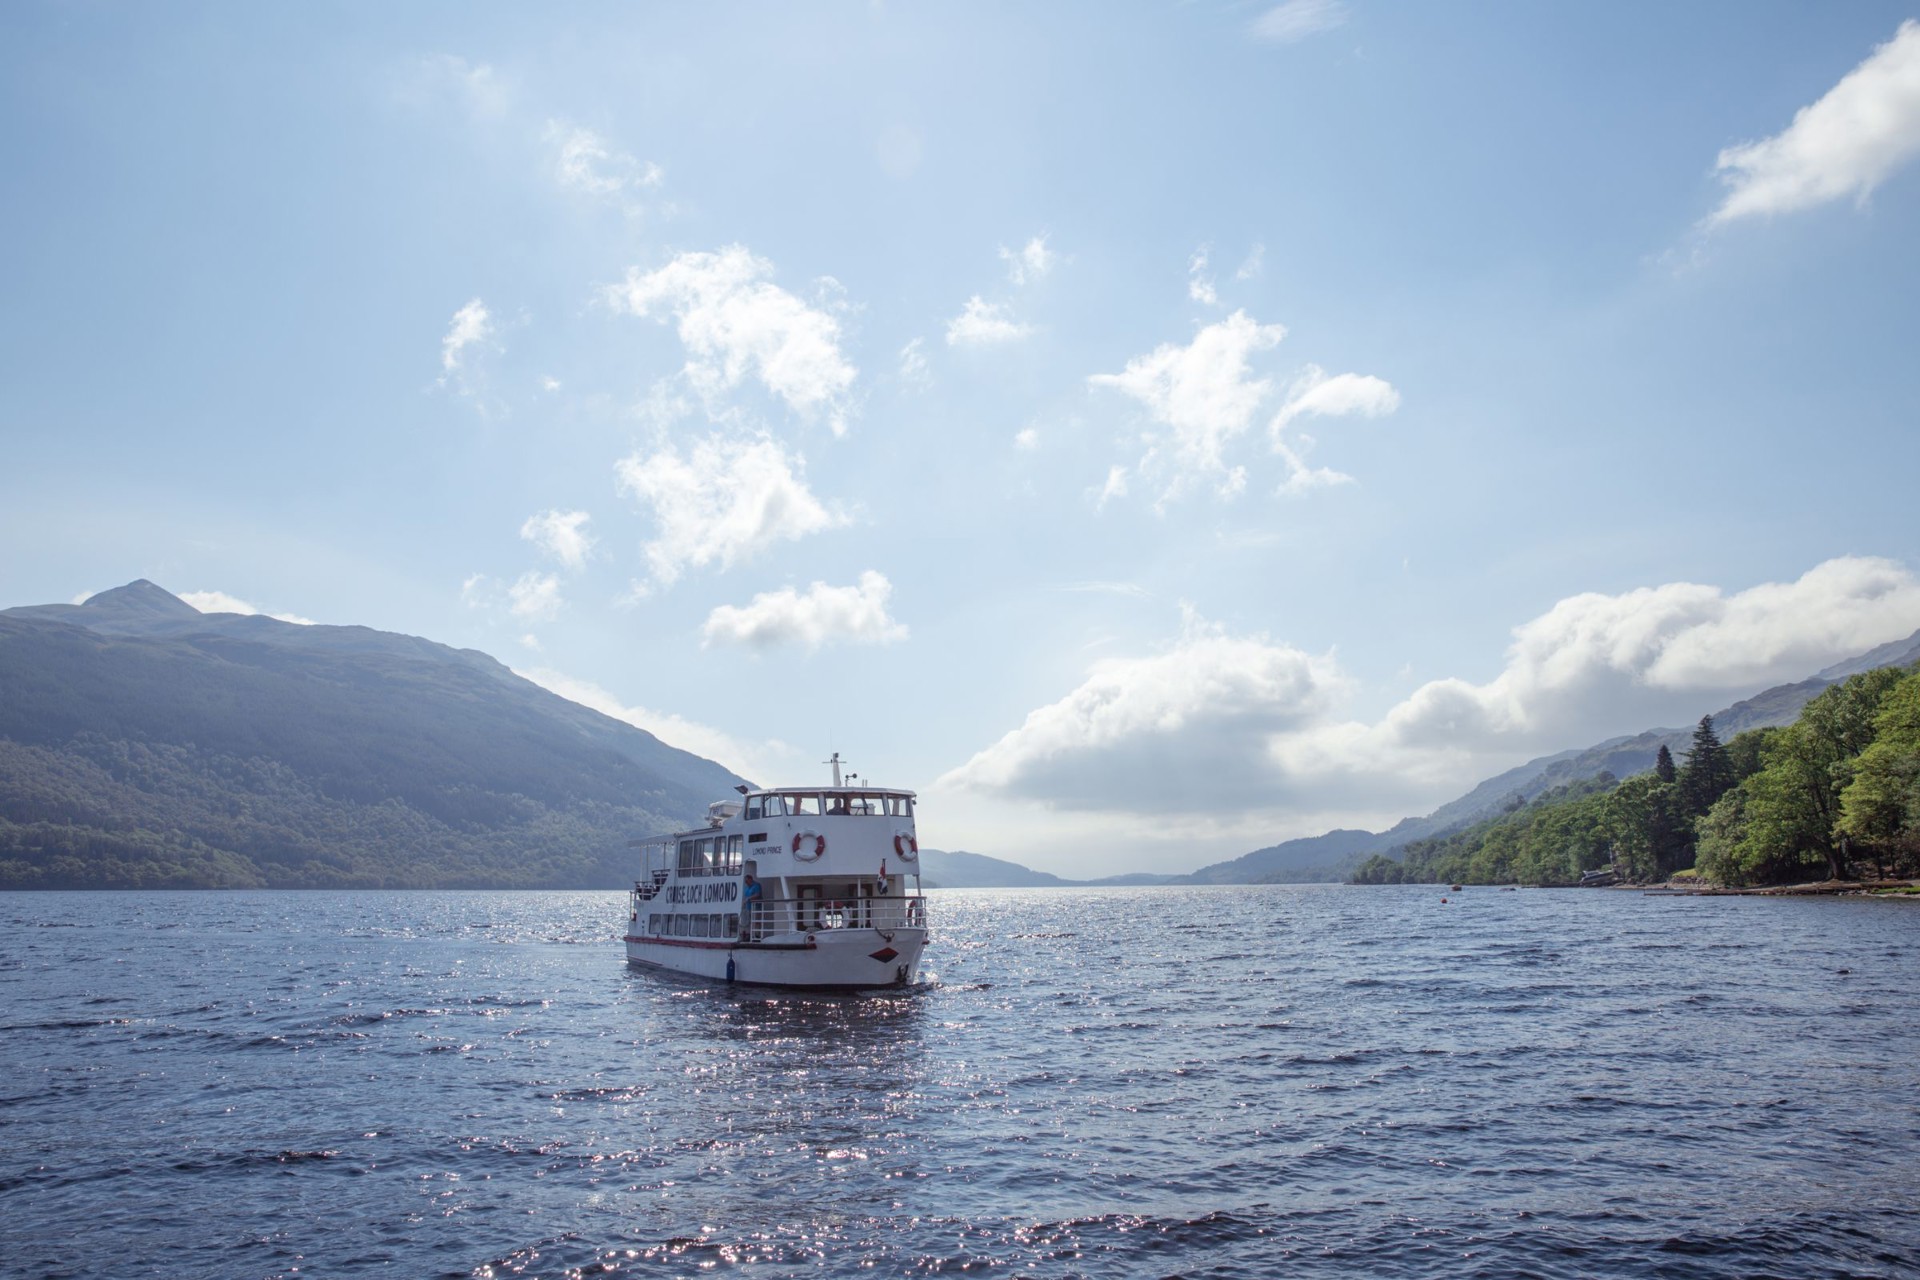 Background image - Boat On Loch Lomond